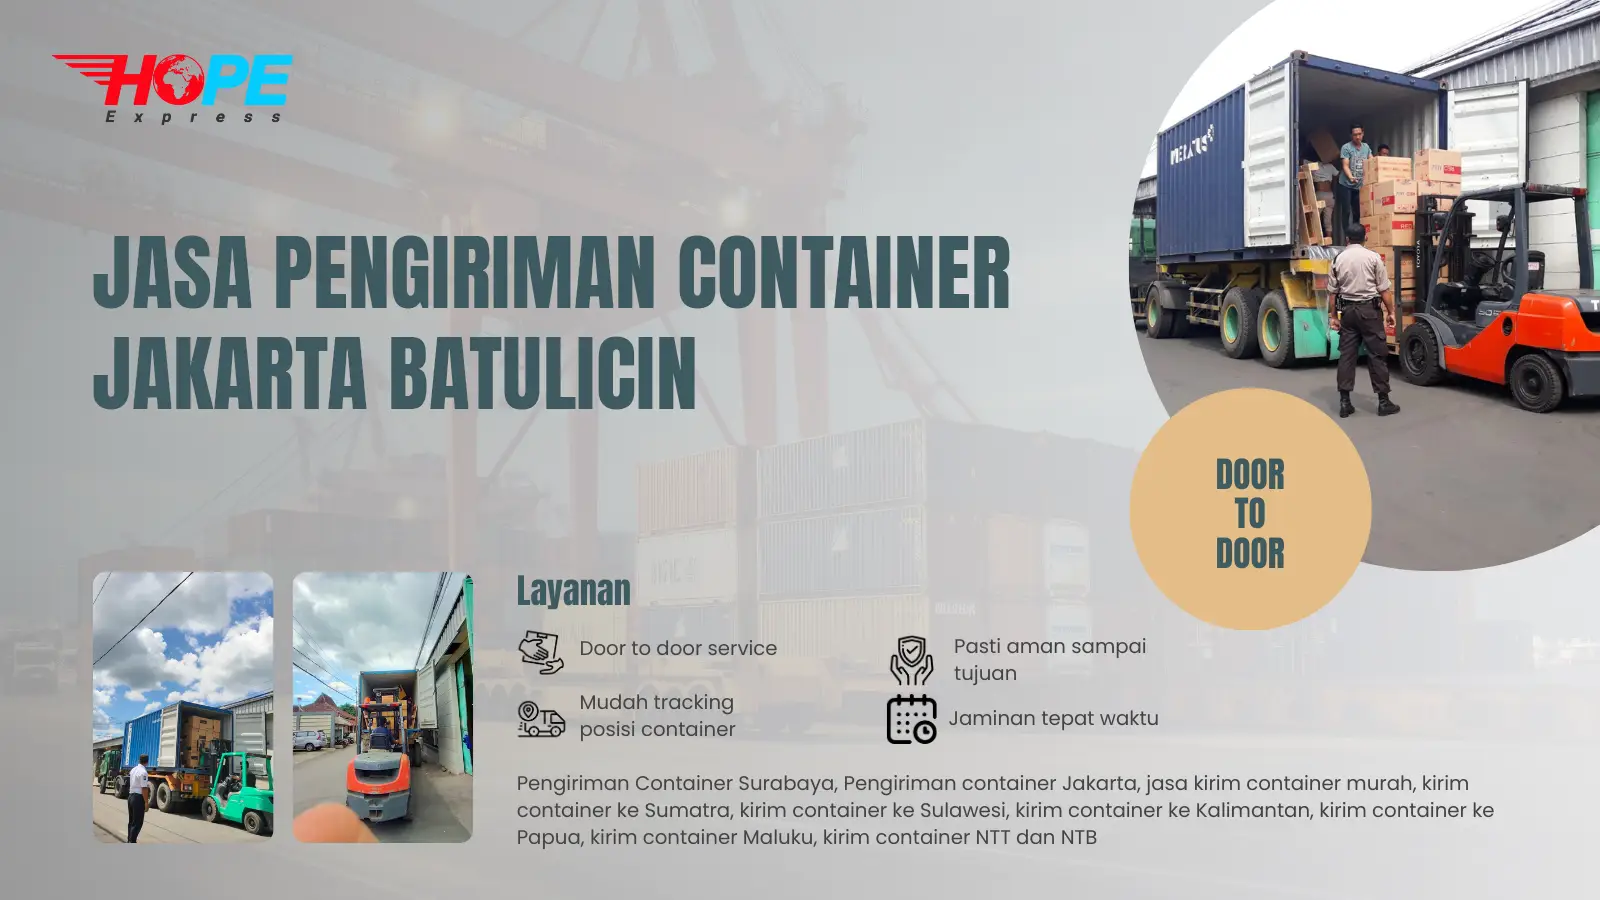 Jasa Pengiriman Container Jakarta Batulicin